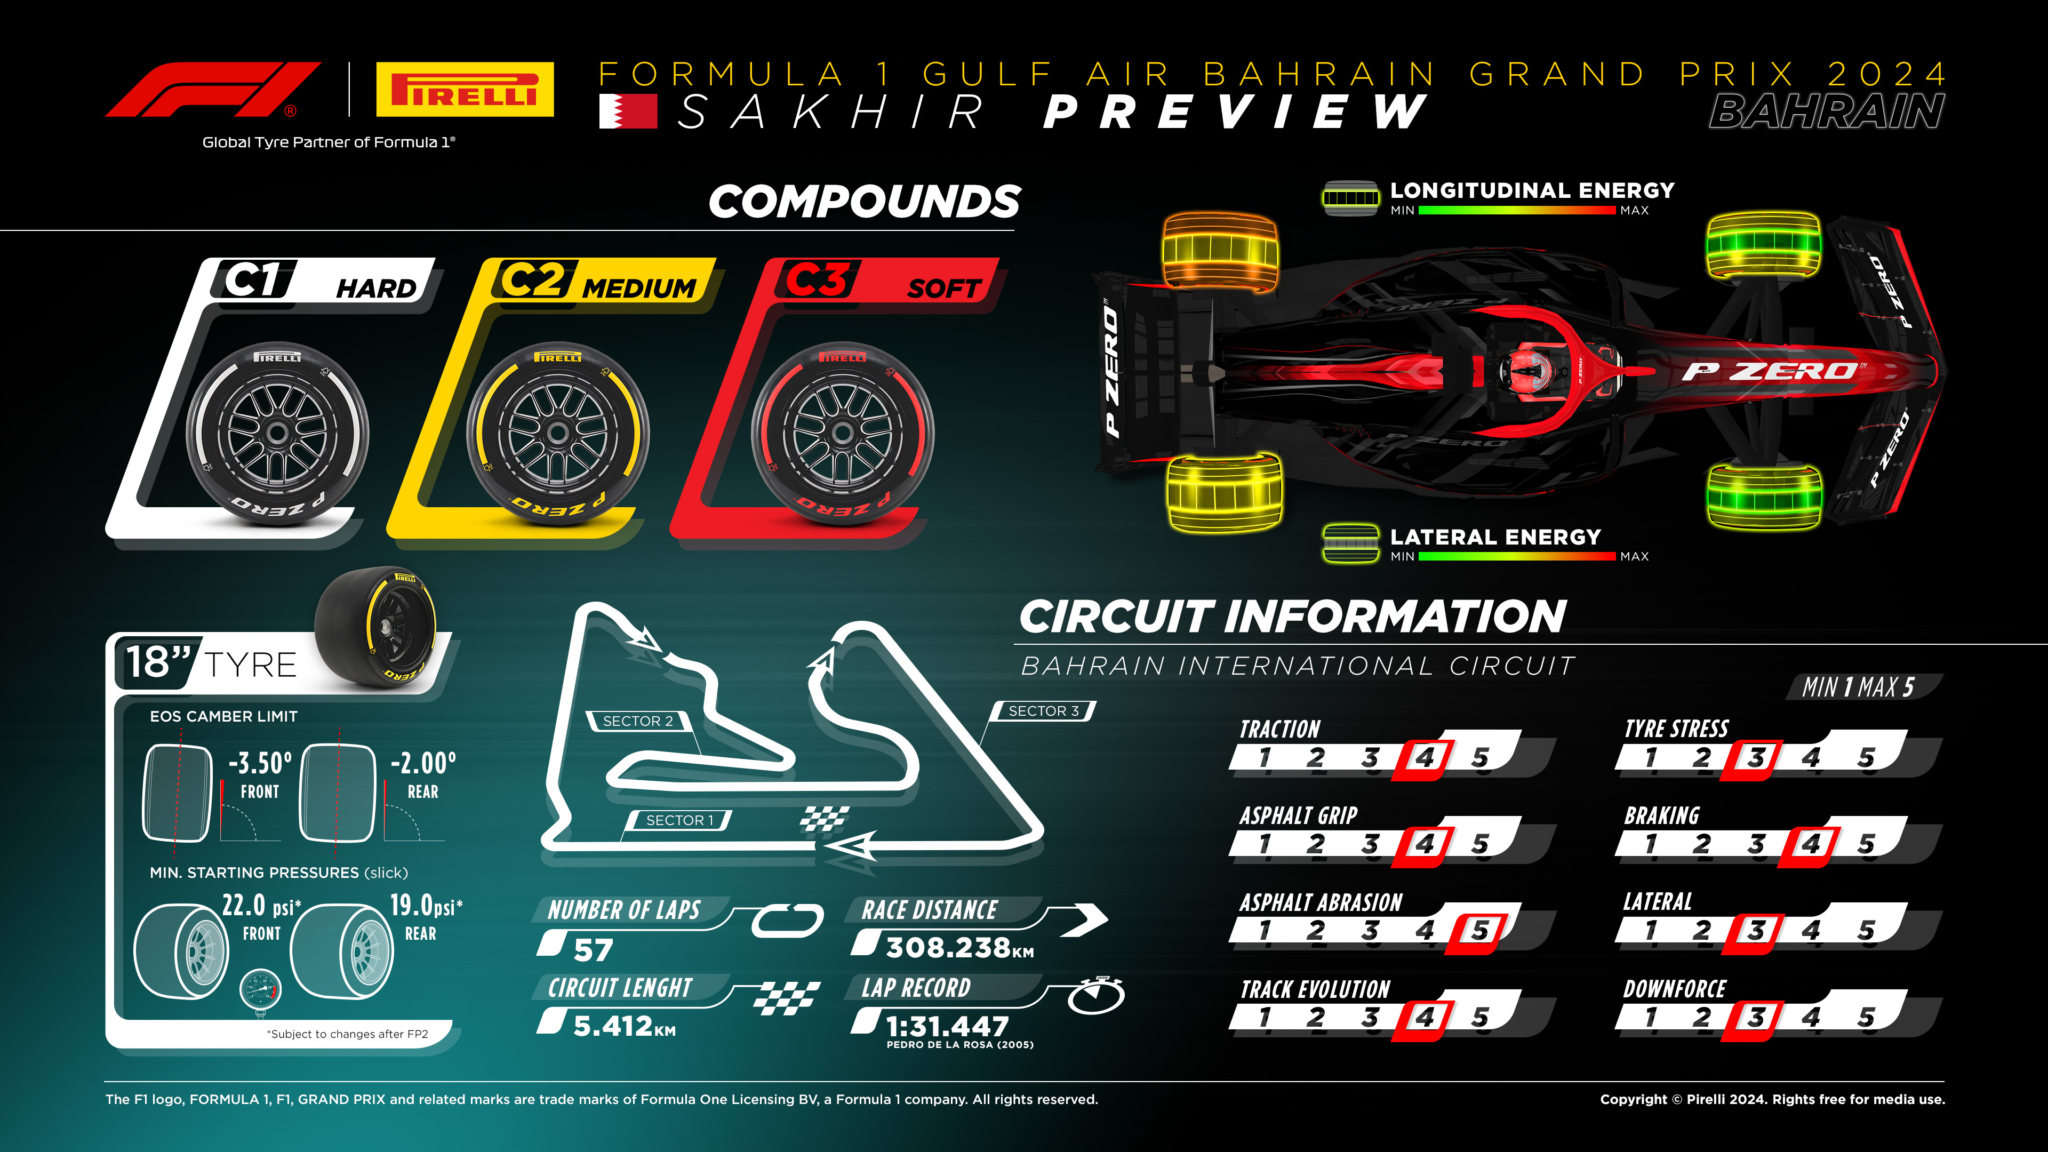 Pirelli looks forward to Bahrain opener for longest Formula 1 season in history